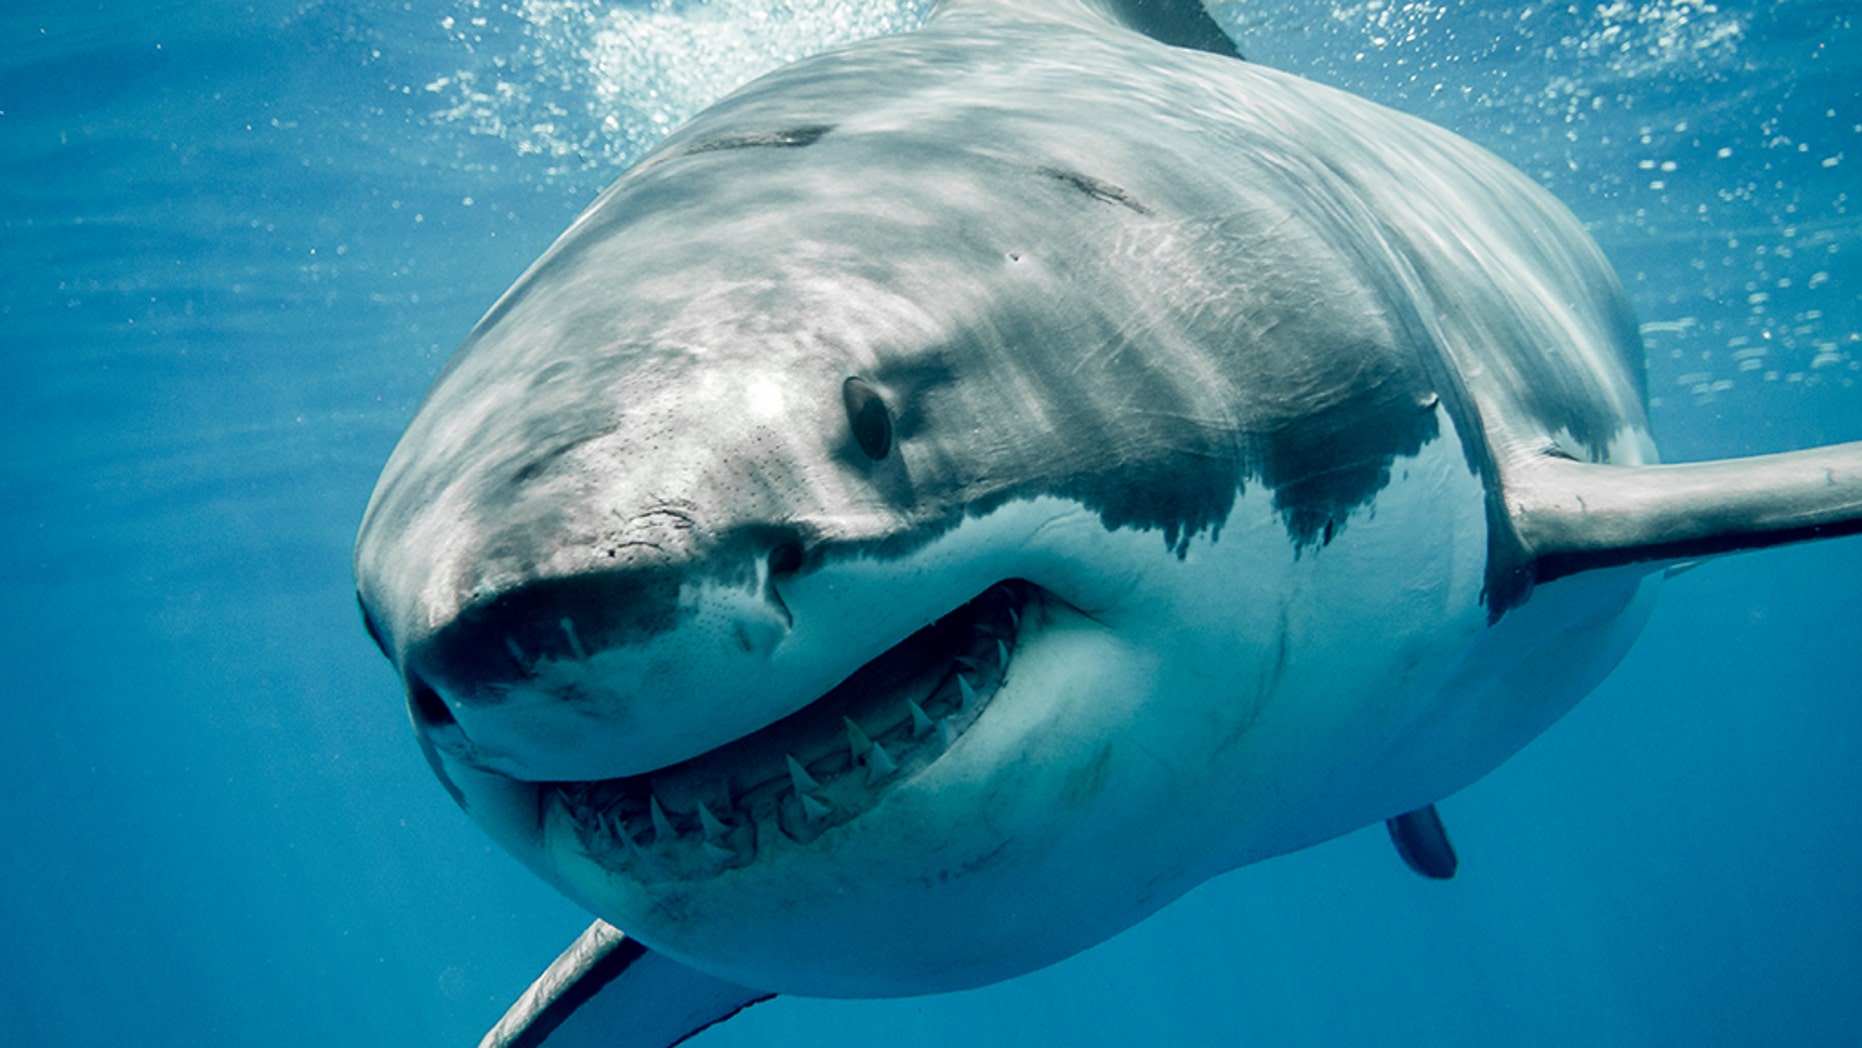 Great white shark caught in Rhode Island waters Fox News